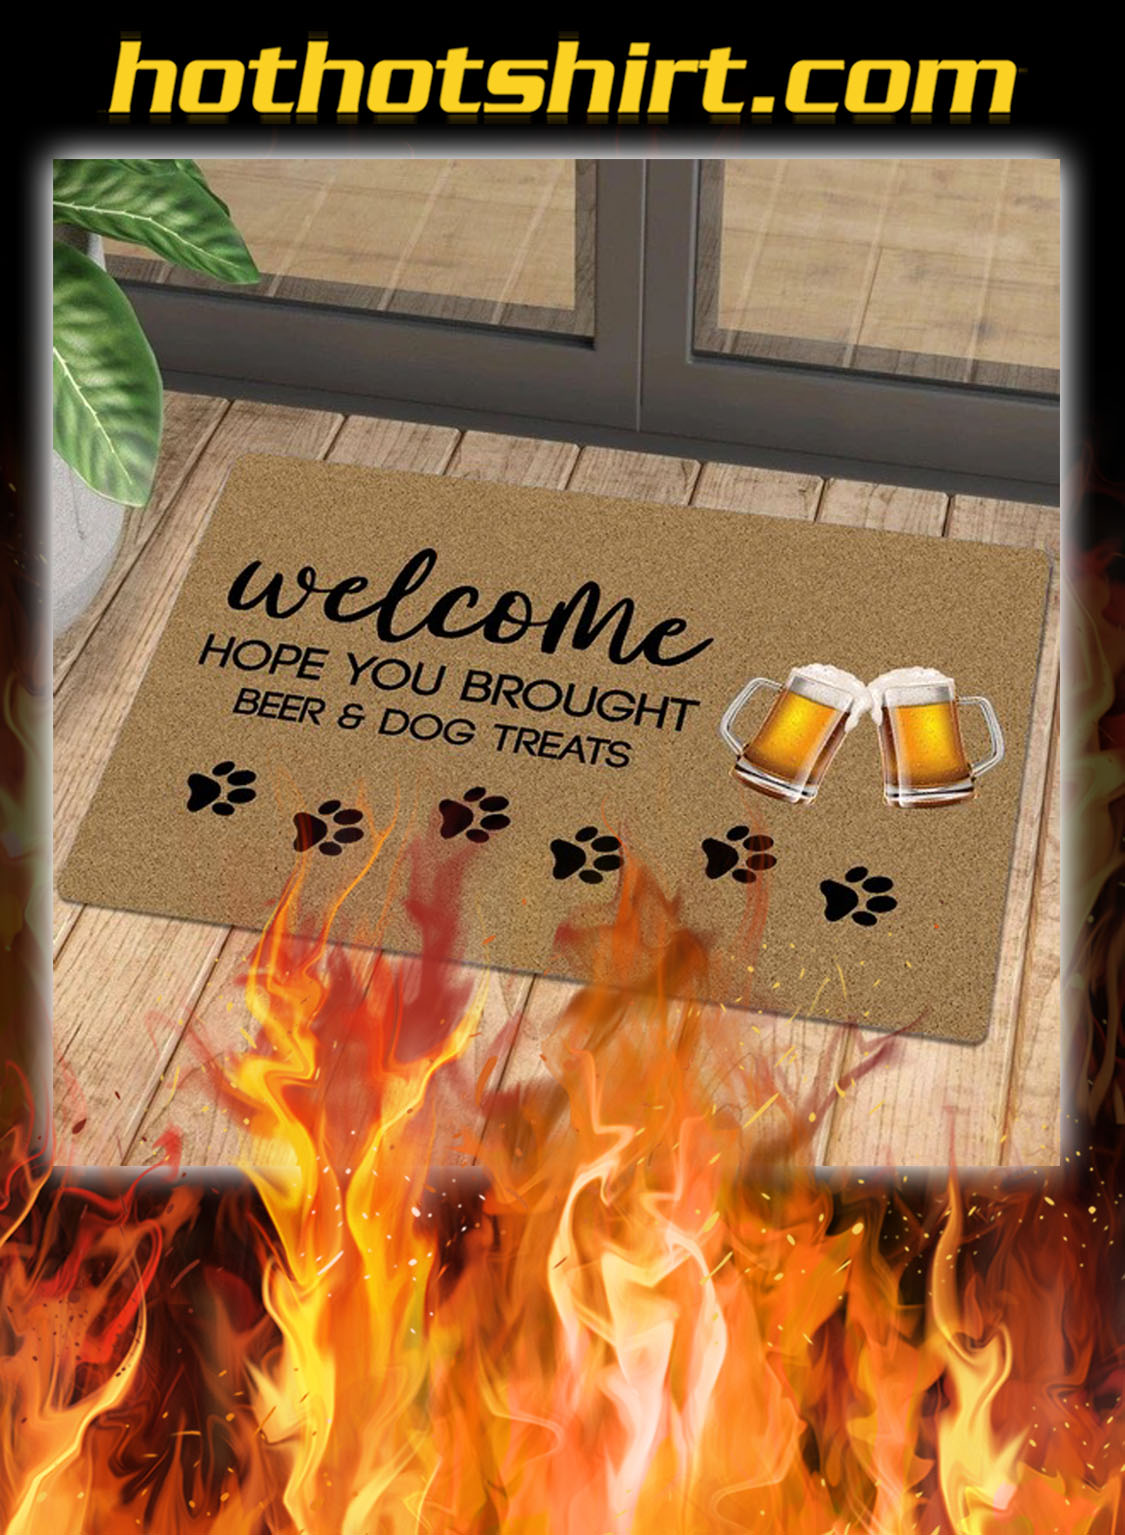 Welcome hope you brought beer and dog treats doormat